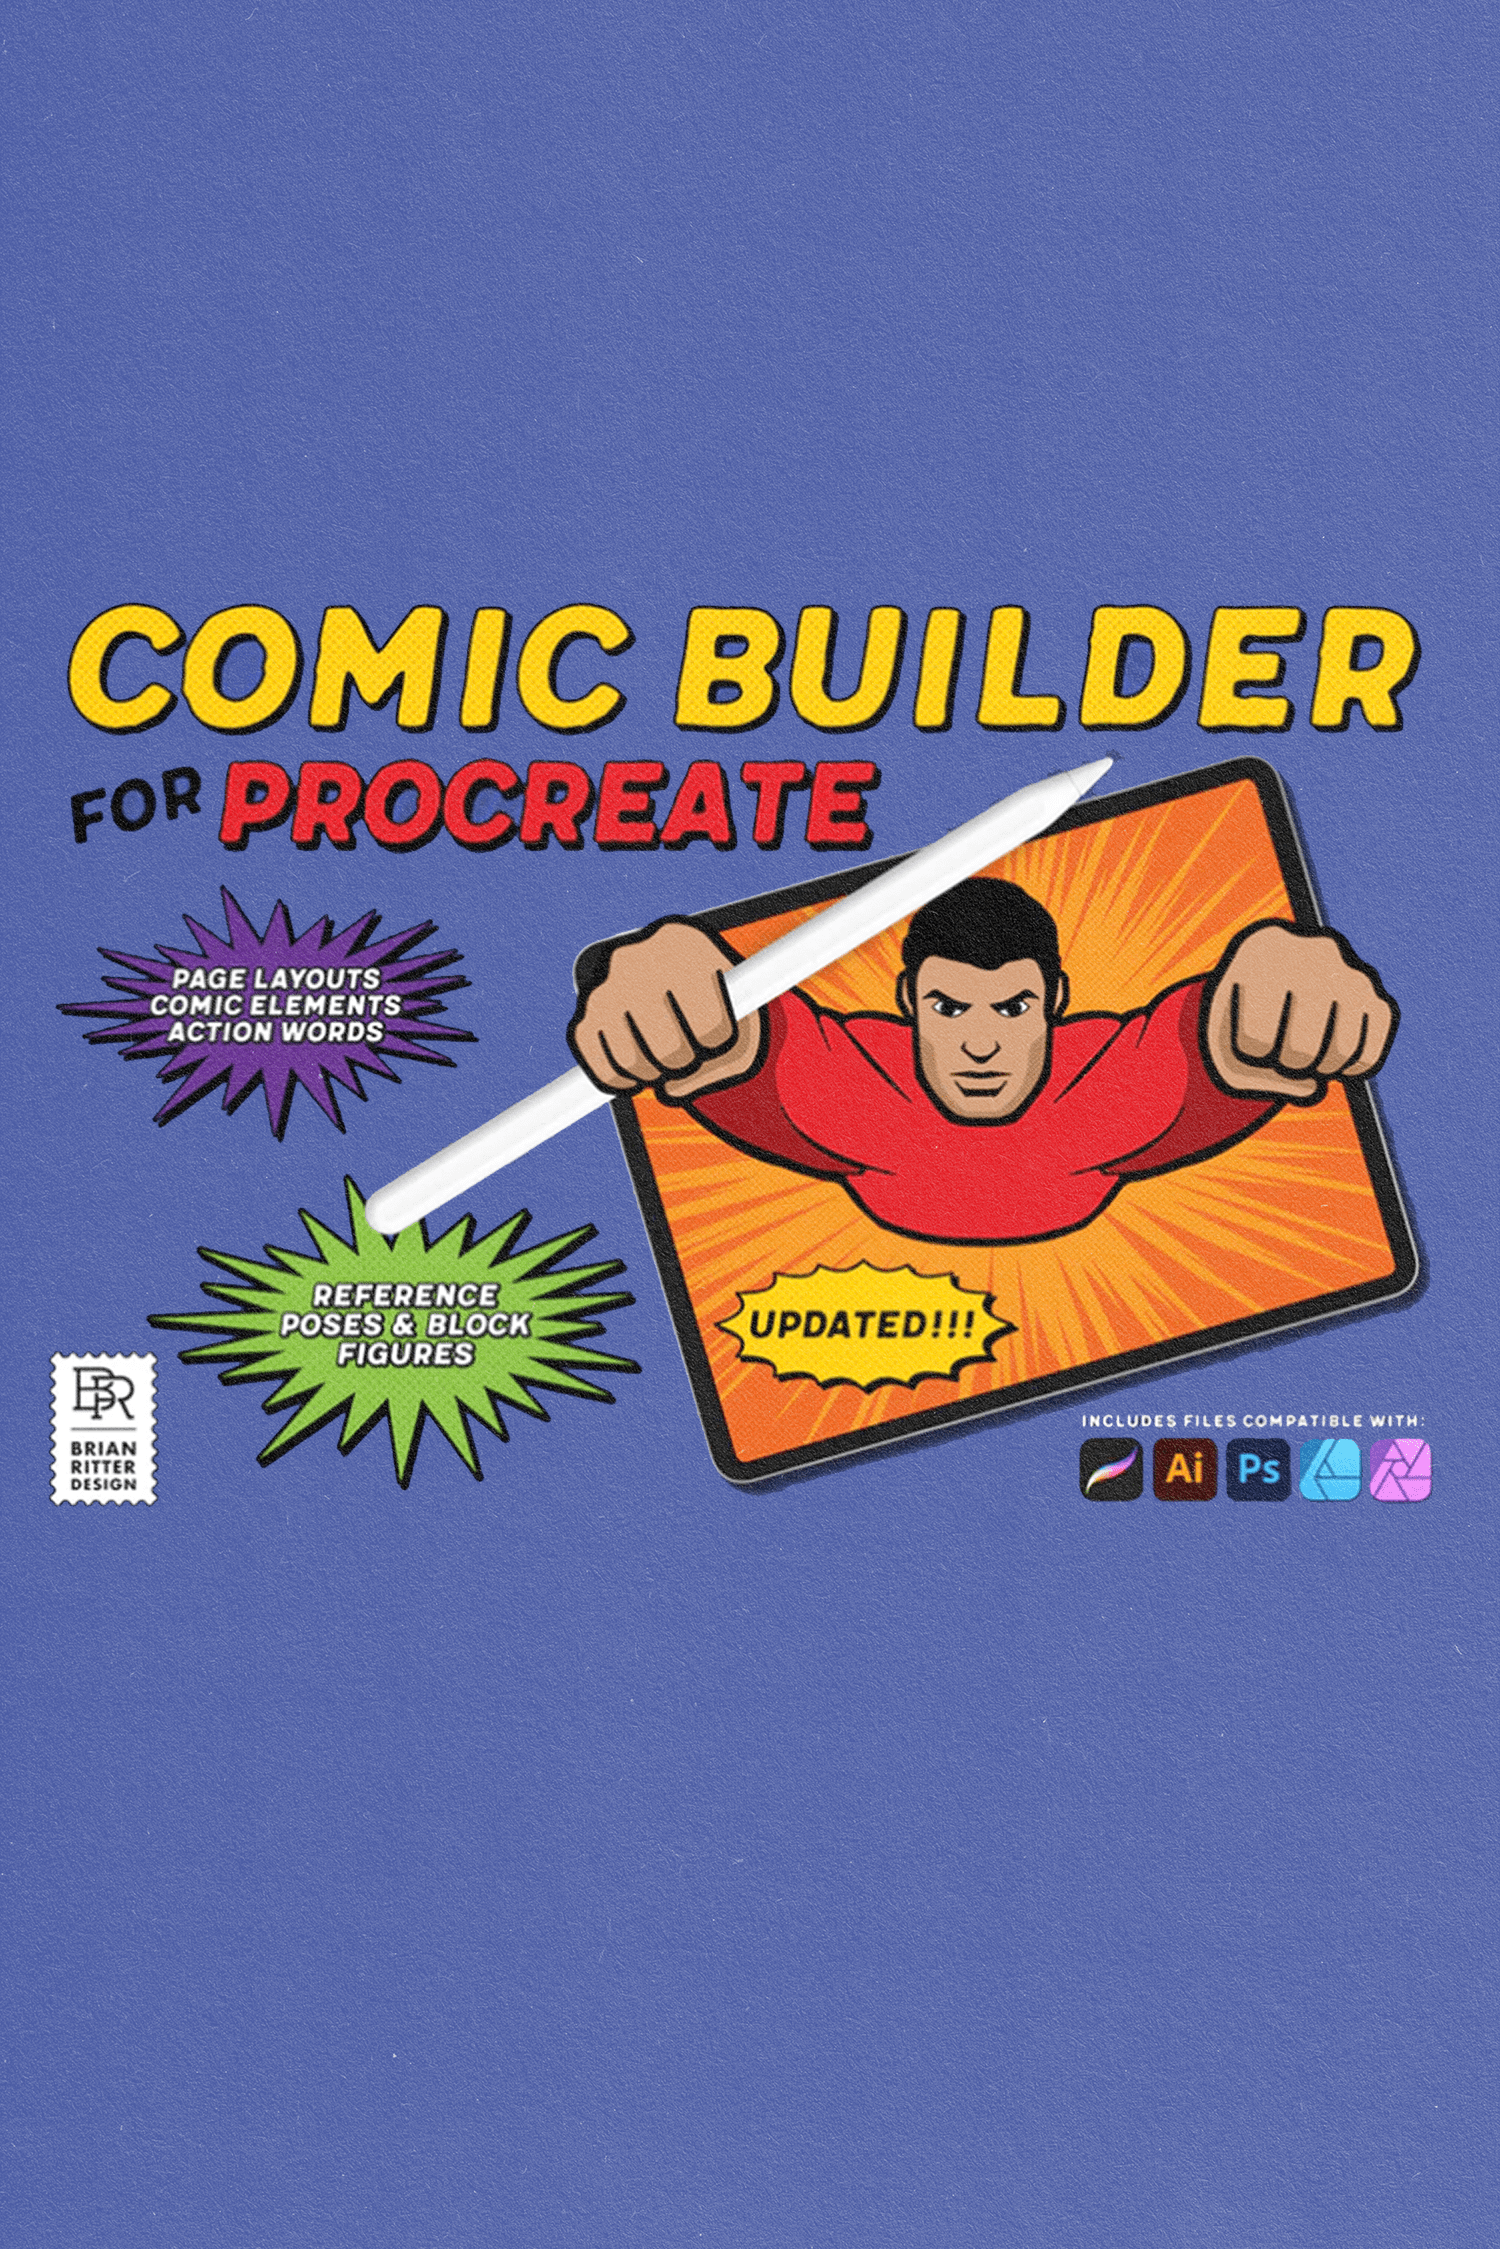 Brian Ritter Design による Comic Builder ツールキット